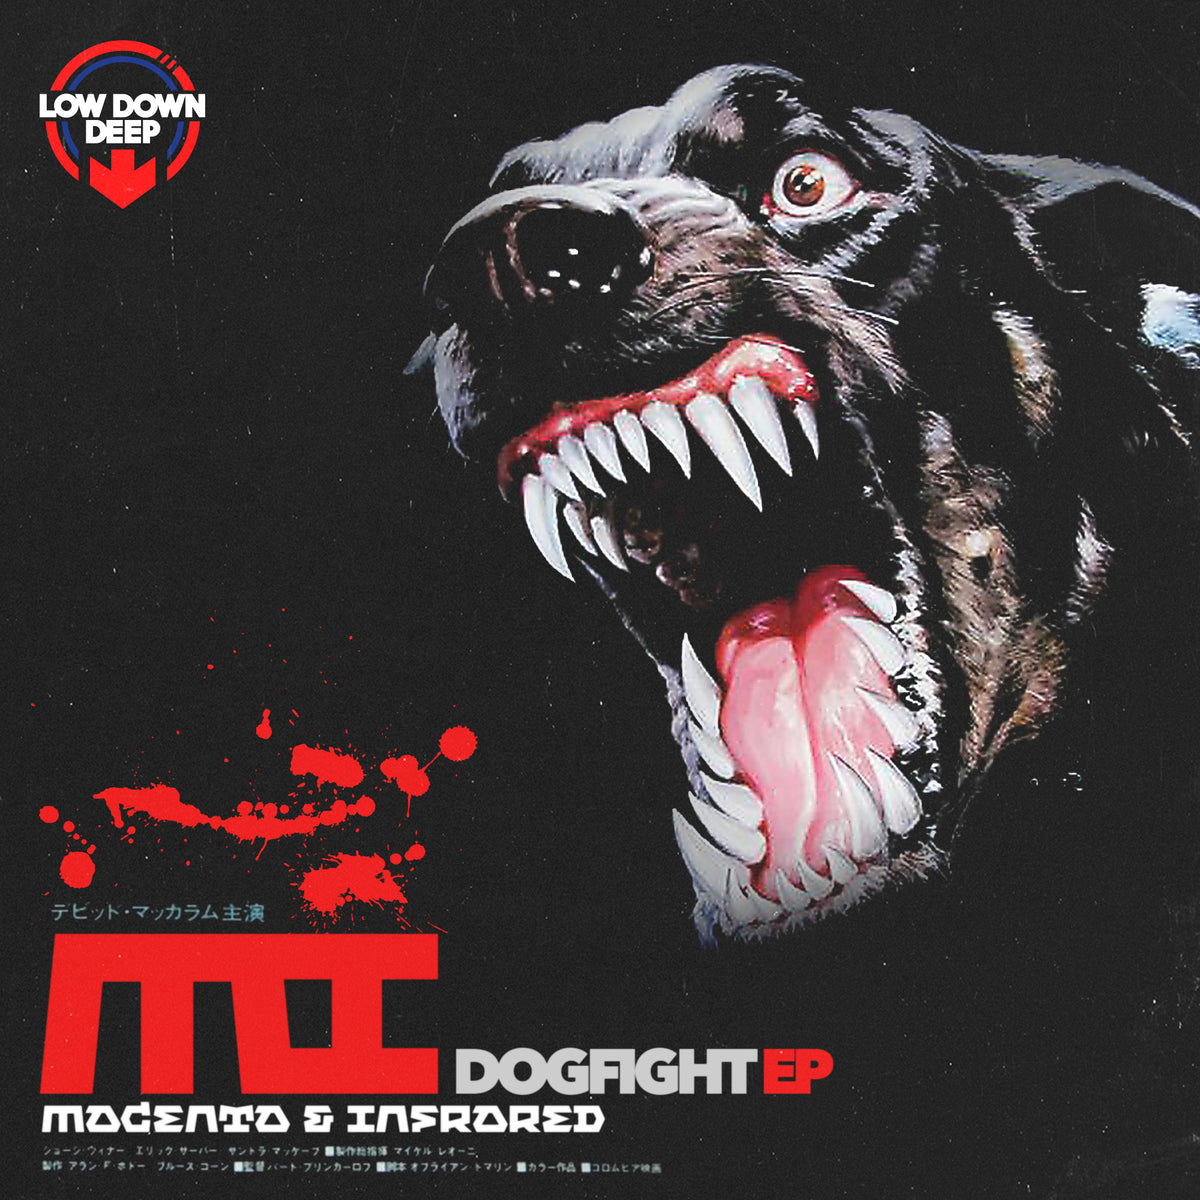 LDD 211 - Magenta & Infrared 'Dogfight EP'